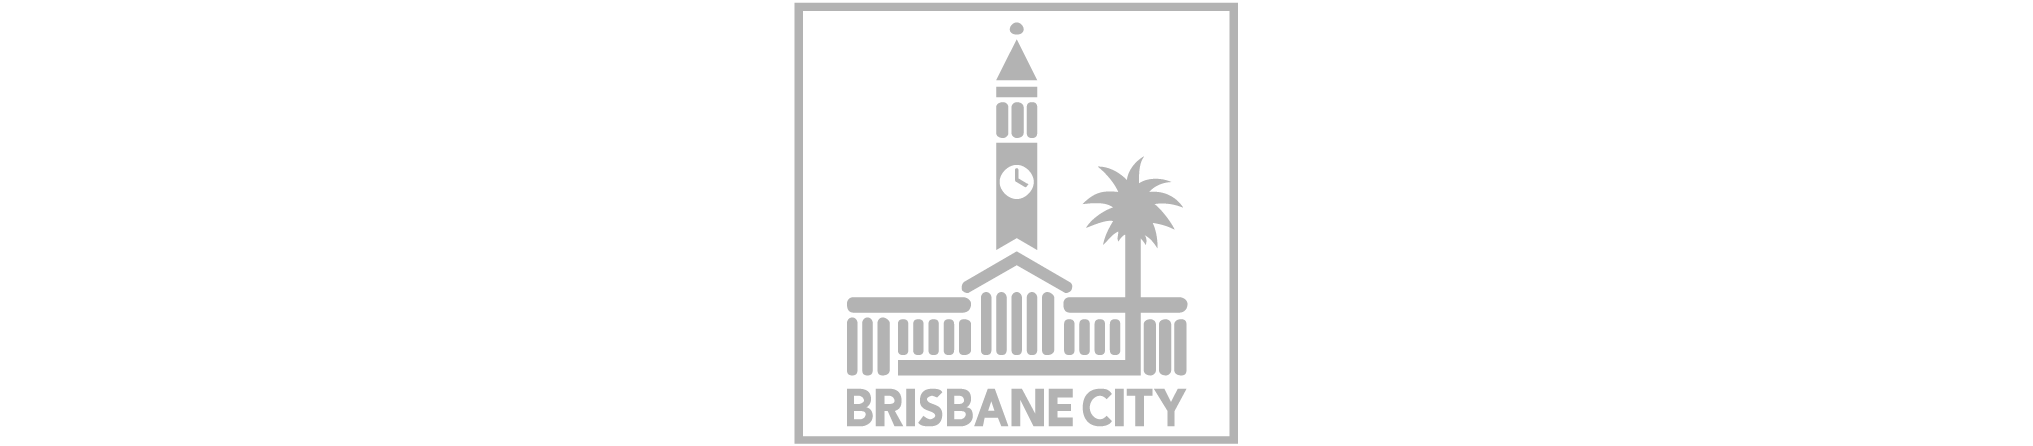 Brisbane City logo - grey.